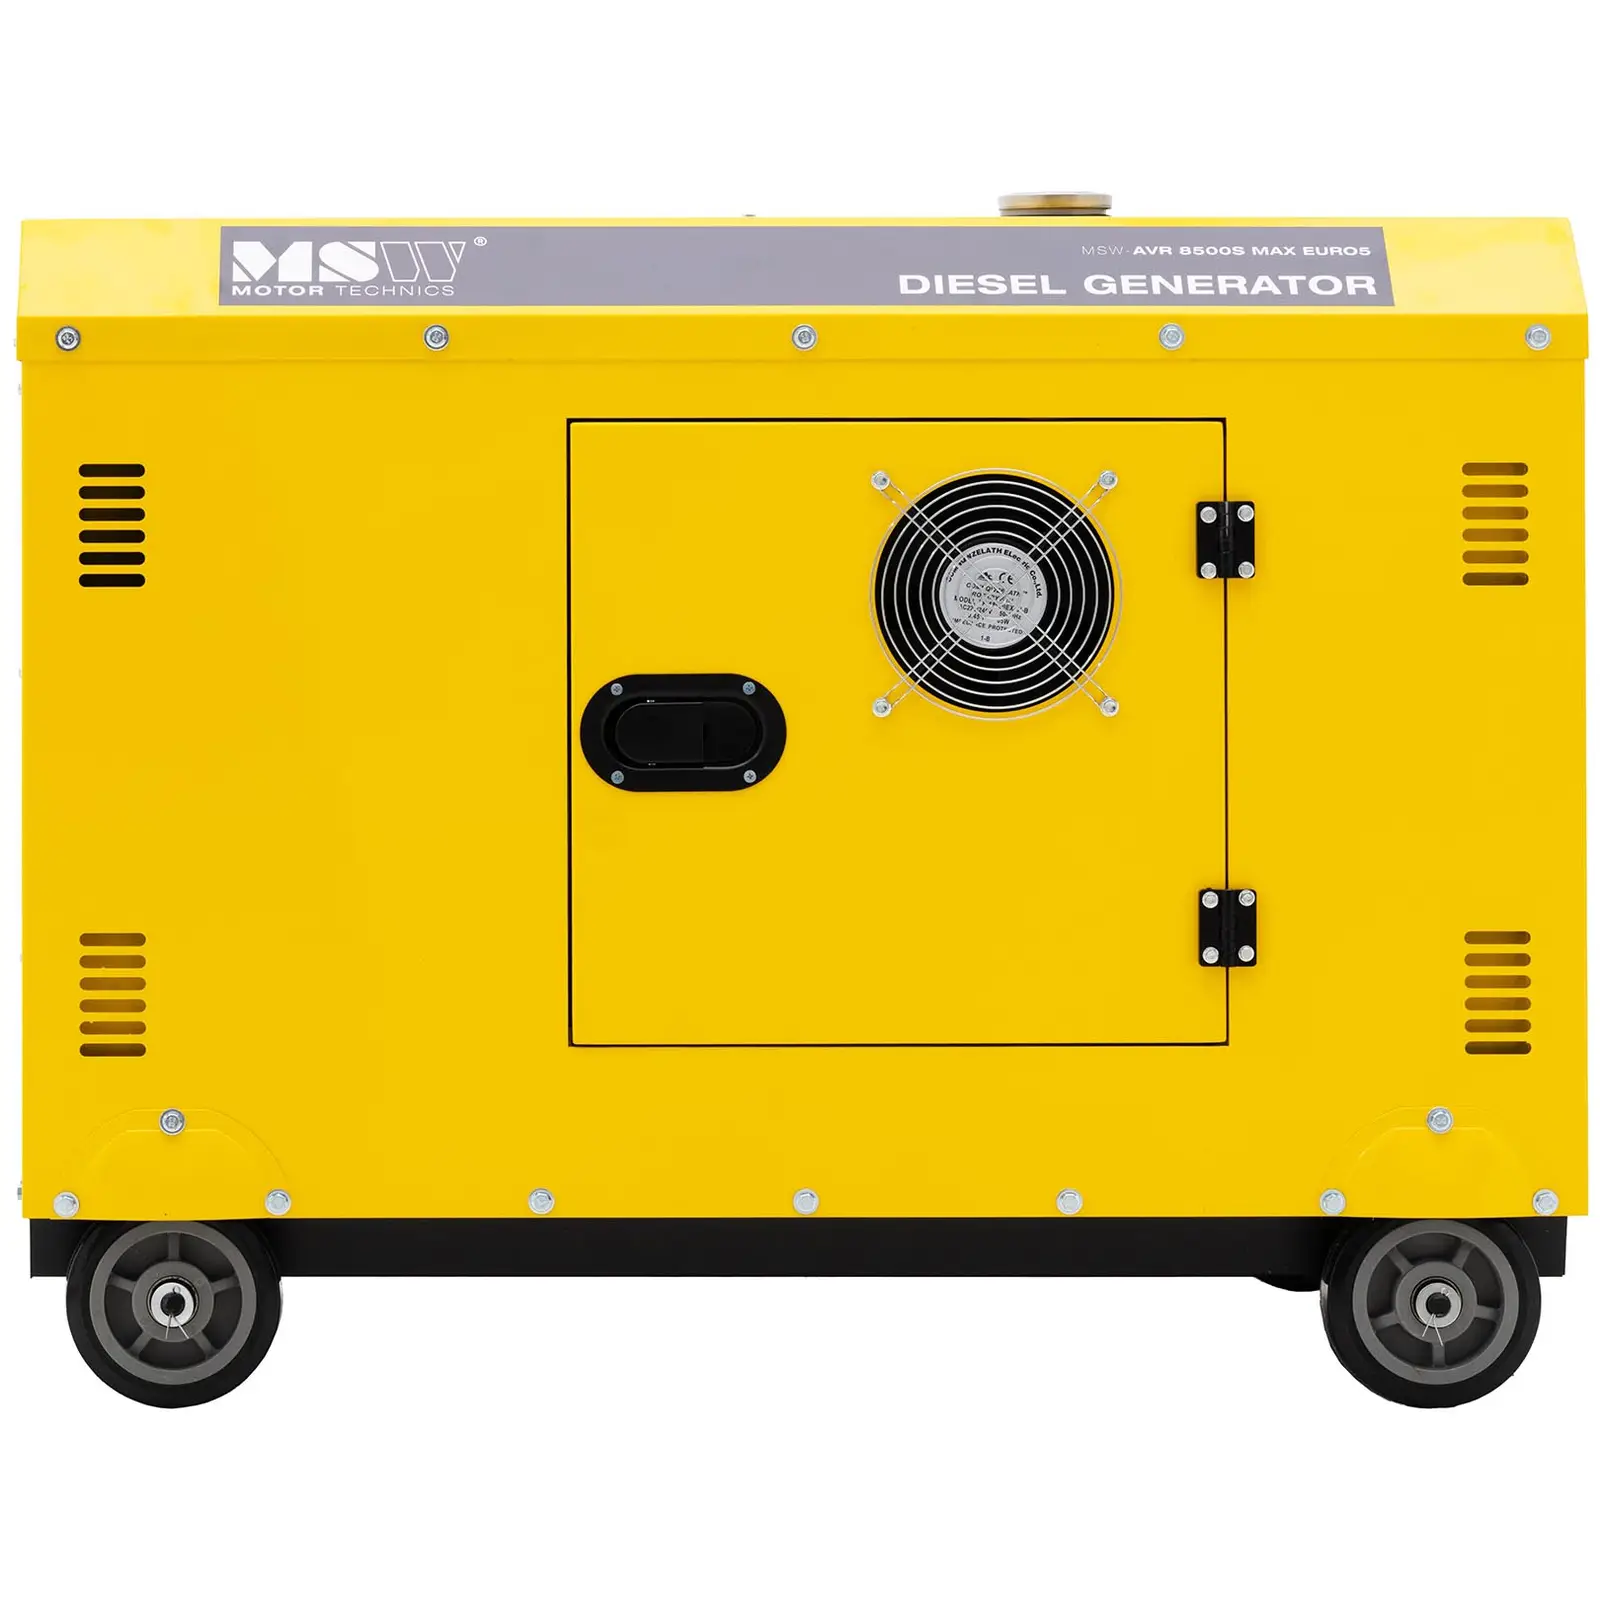 Dizelski generator - 7220 / 8500 W - 30 L - 240/400 V - mobilni - AVR - Euro 5